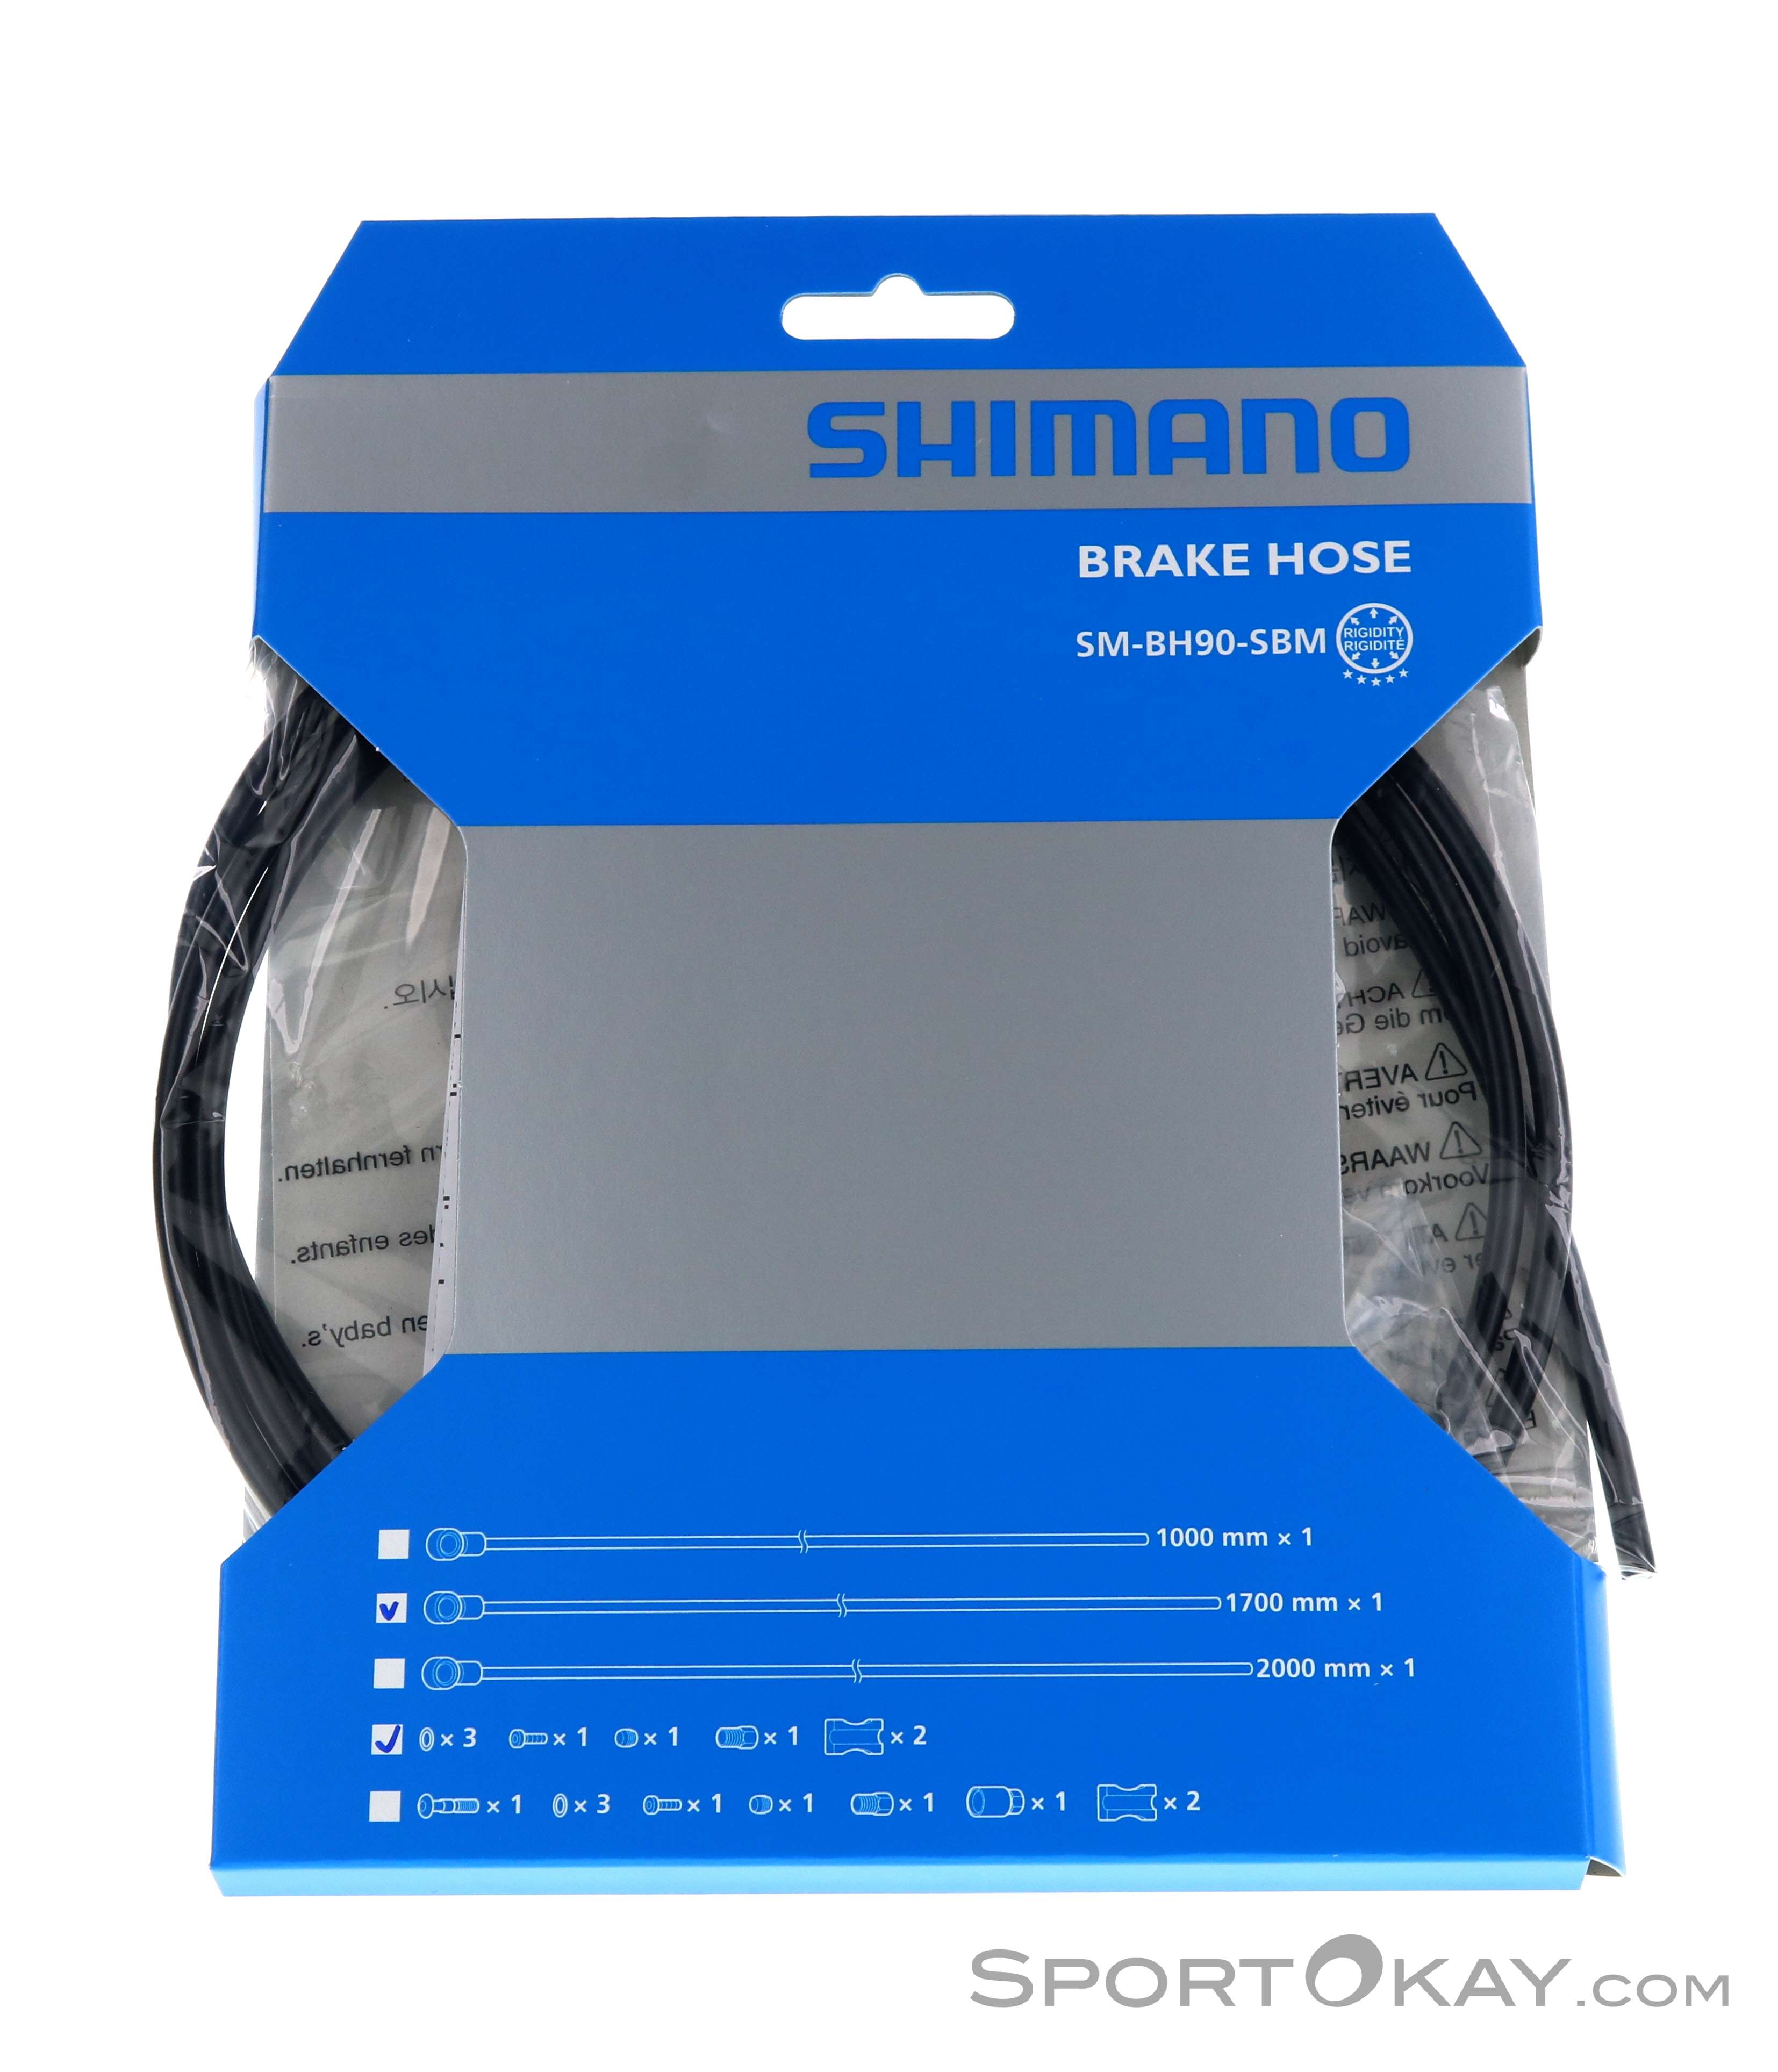 NEW BRAKE HOSE KIT FOR SHIMANO-BH90 SLX M7000 XT M8000 XTR M9000 SERIES BRAKES